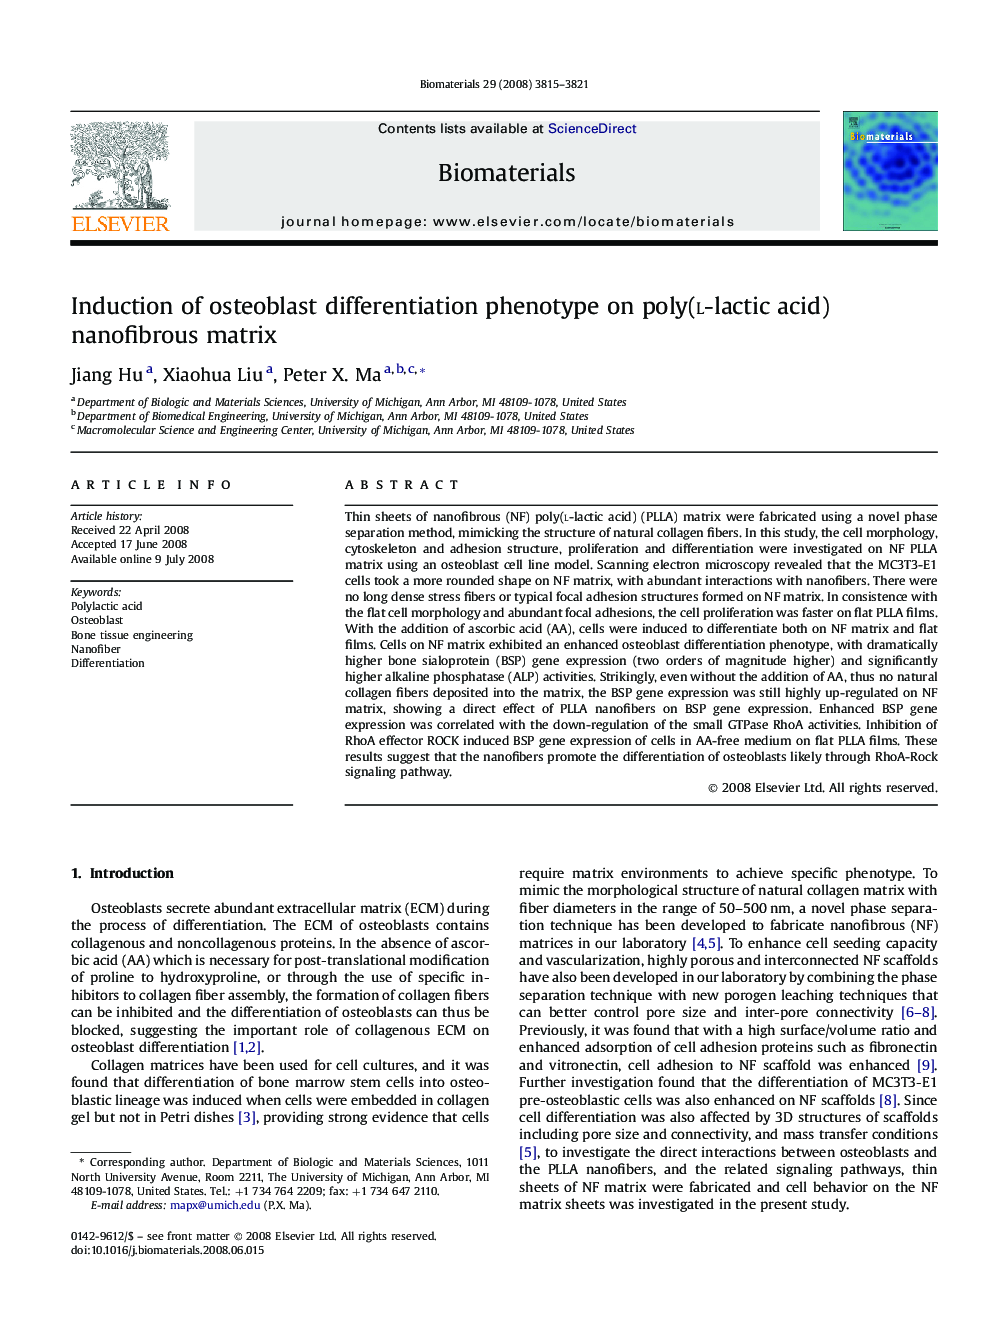 Induction of osteoblast differentiation phenotype on poly(l-lactic acid) nanofibrous matrix